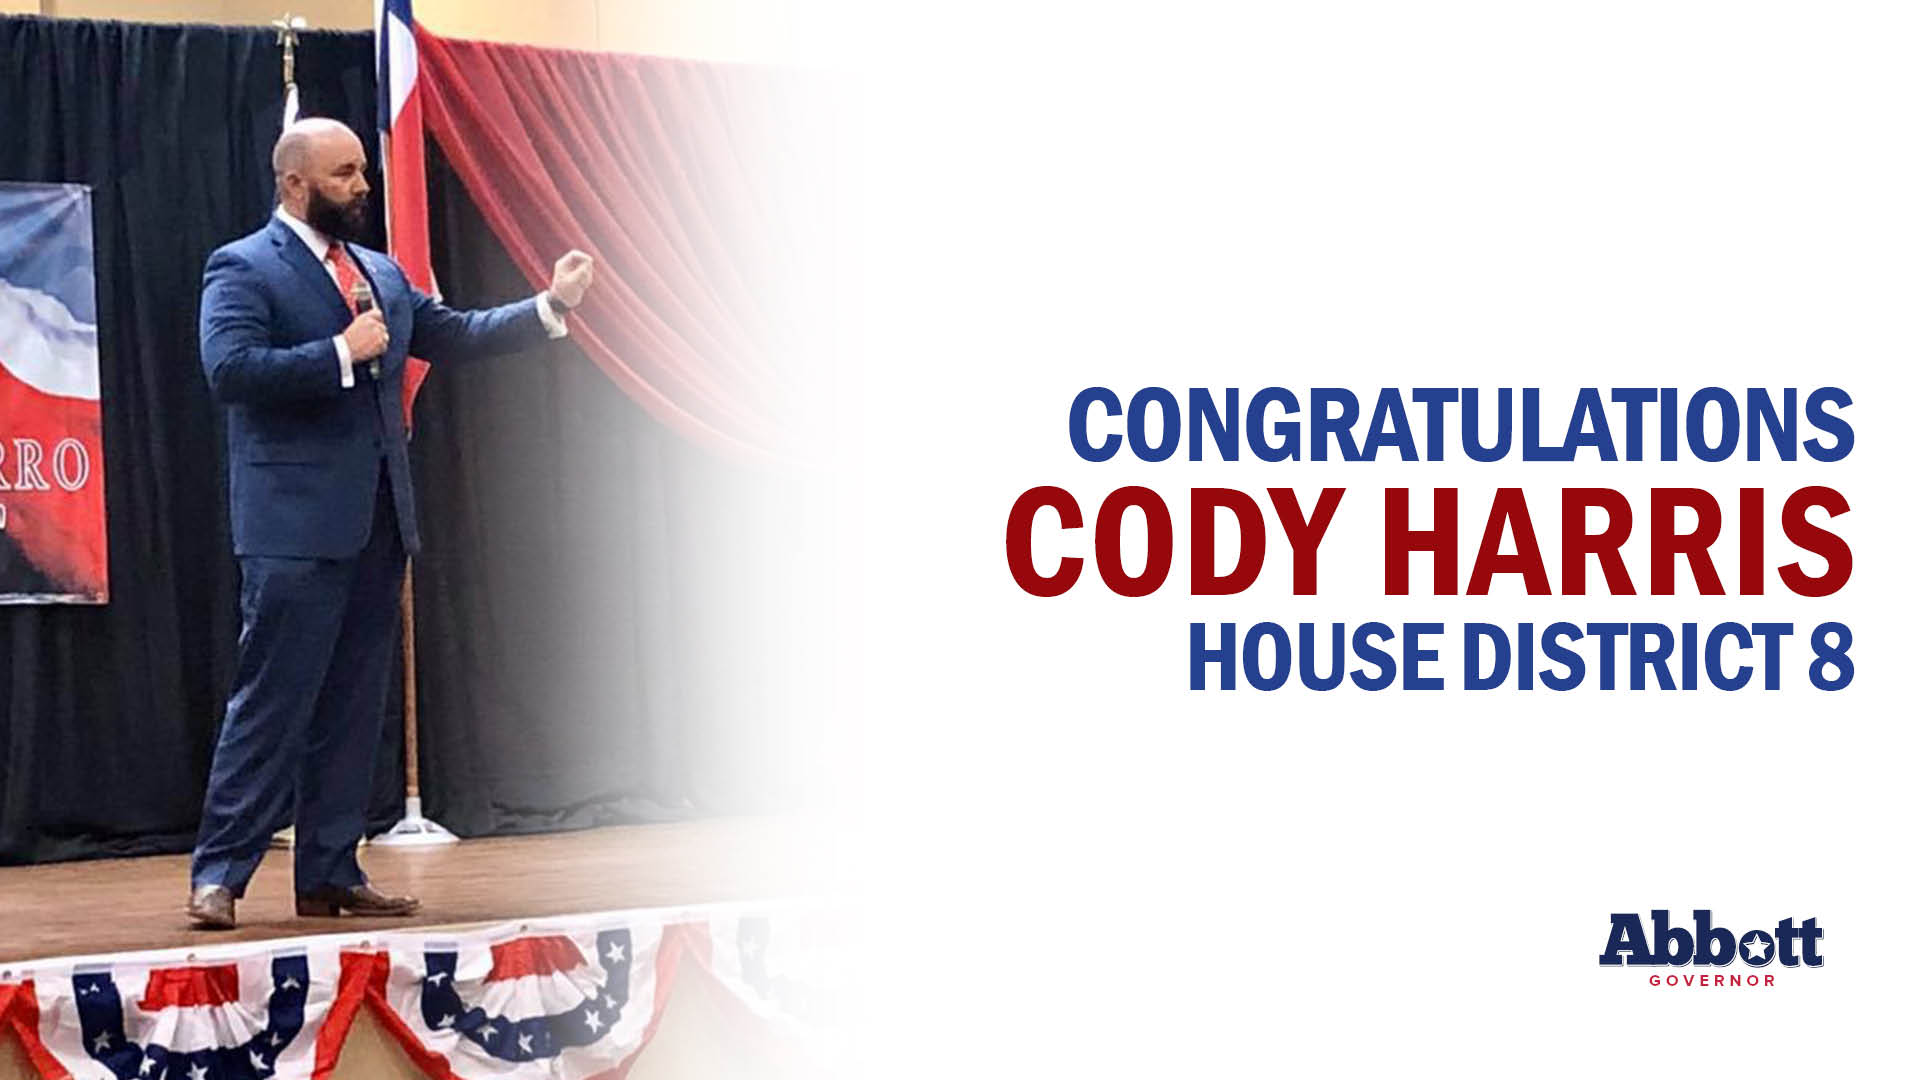 Governor Abbott Congratulates Rep. Cody Harris On Re-Election